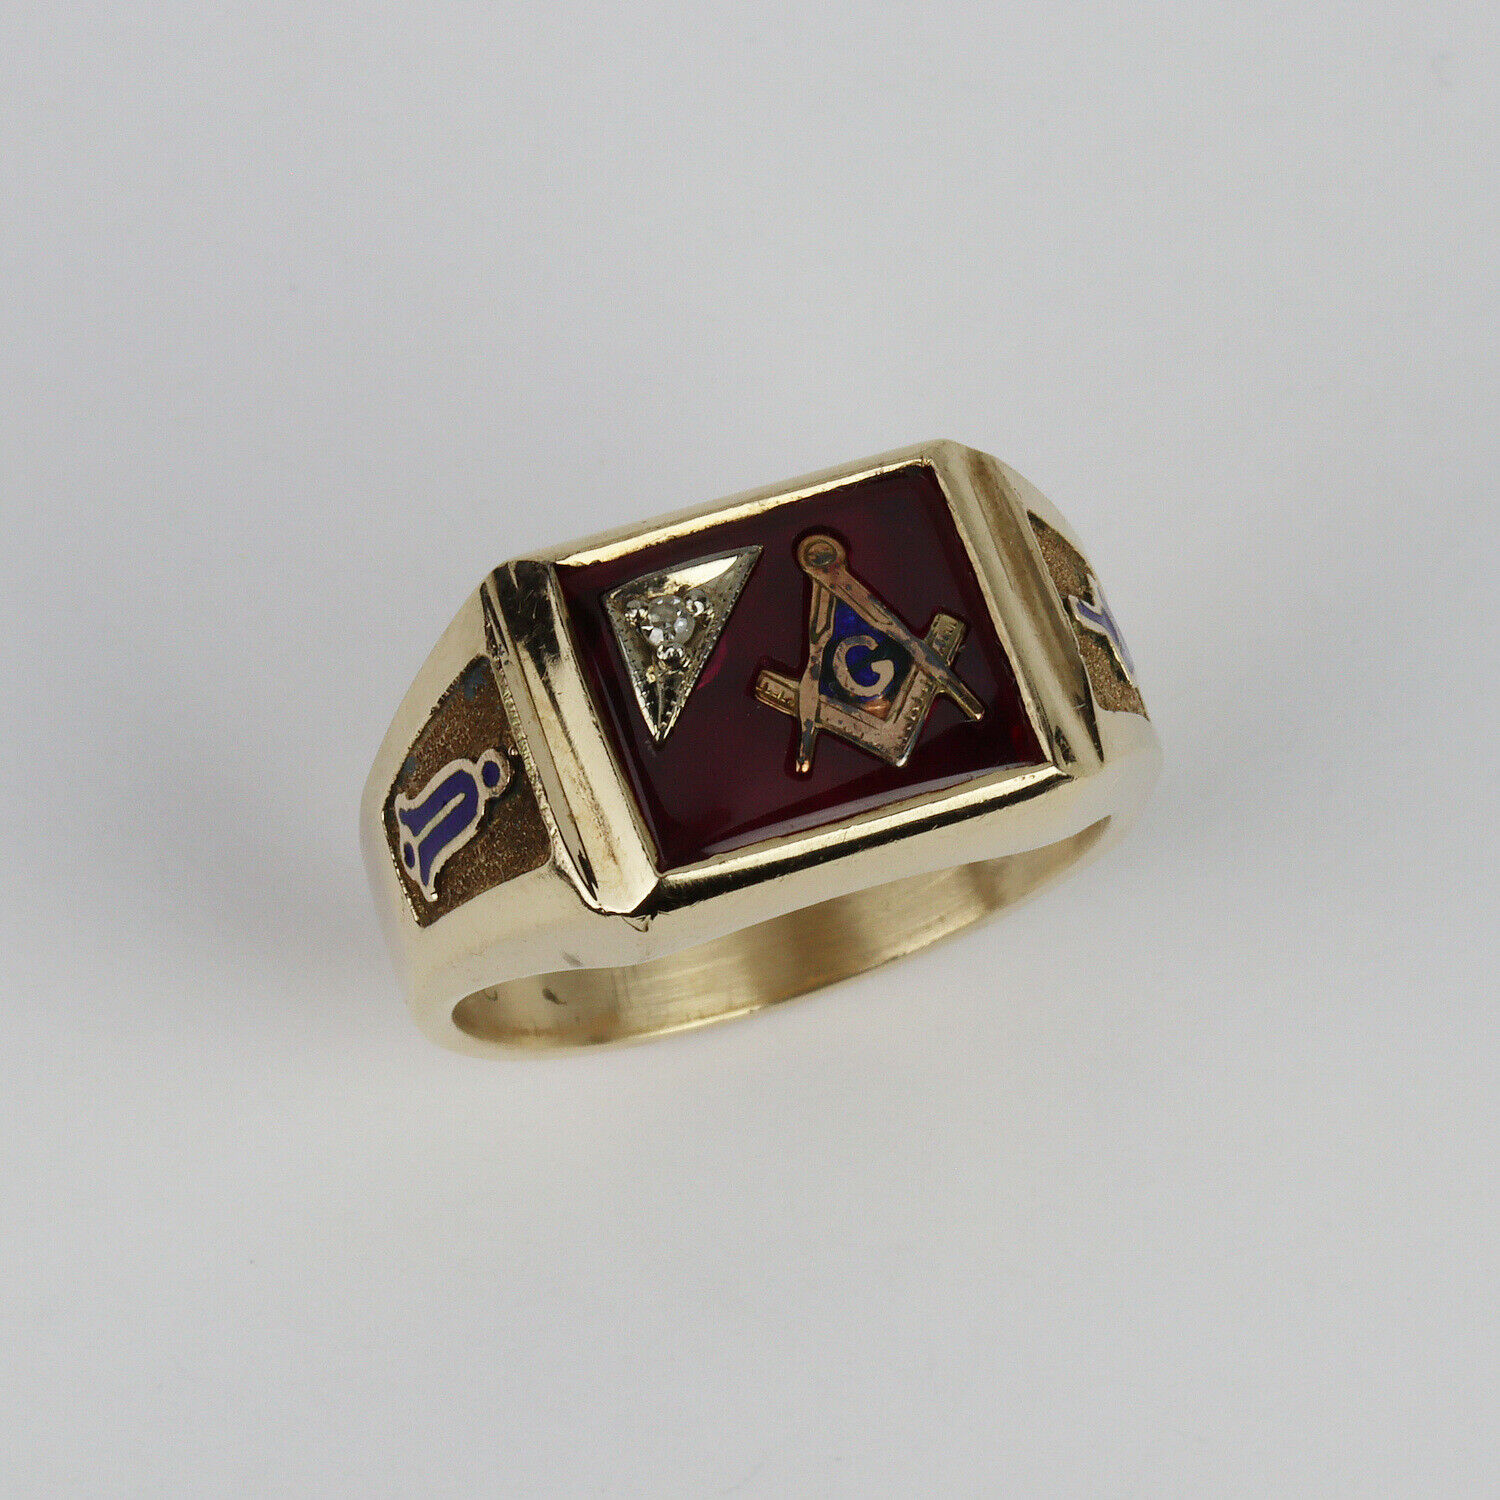 Vintage 10k Yellow Gold, Diamond Men's Freemason Masonic Ring Size 10